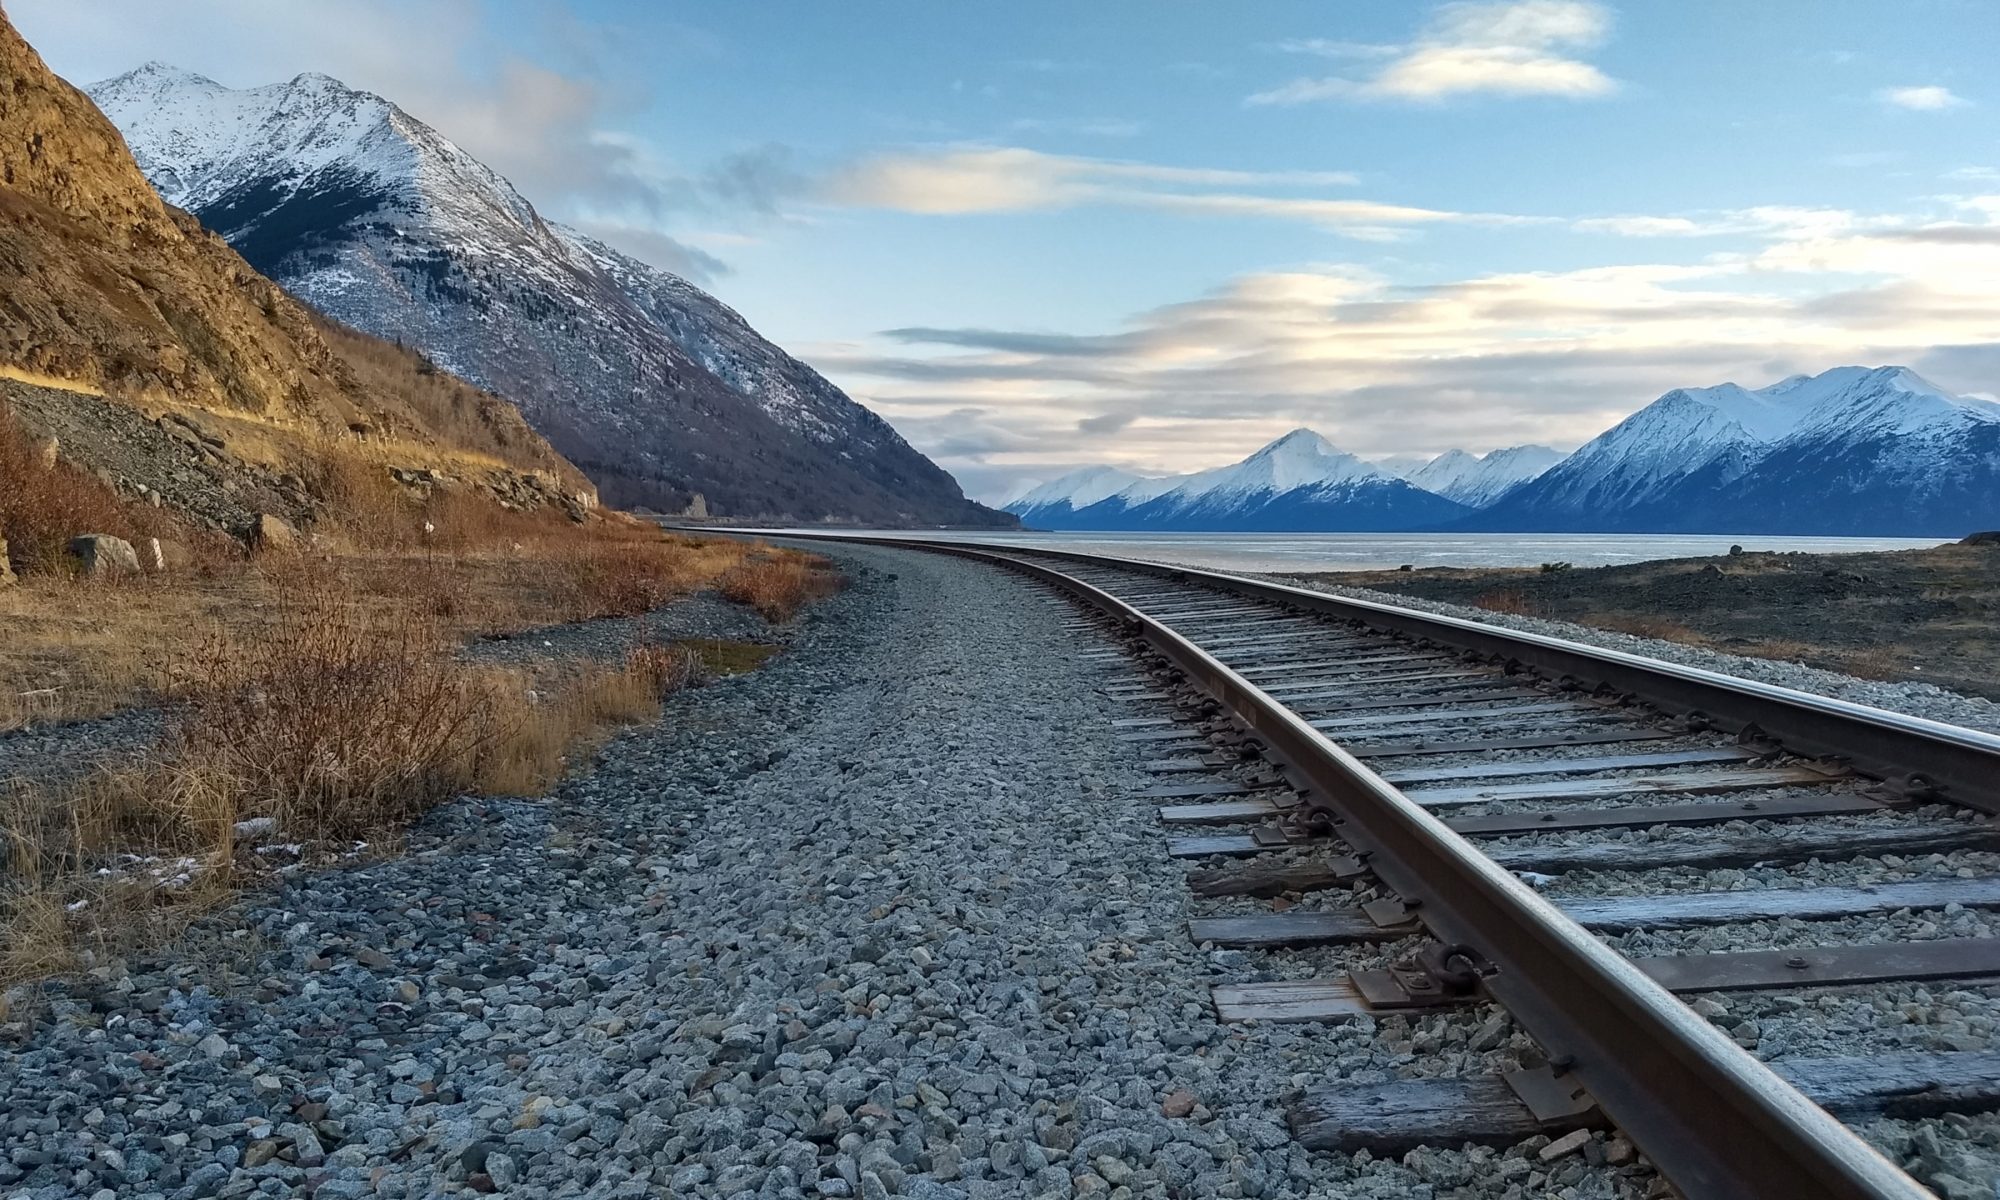 View of the Alaska railroad near Turnagain Arm